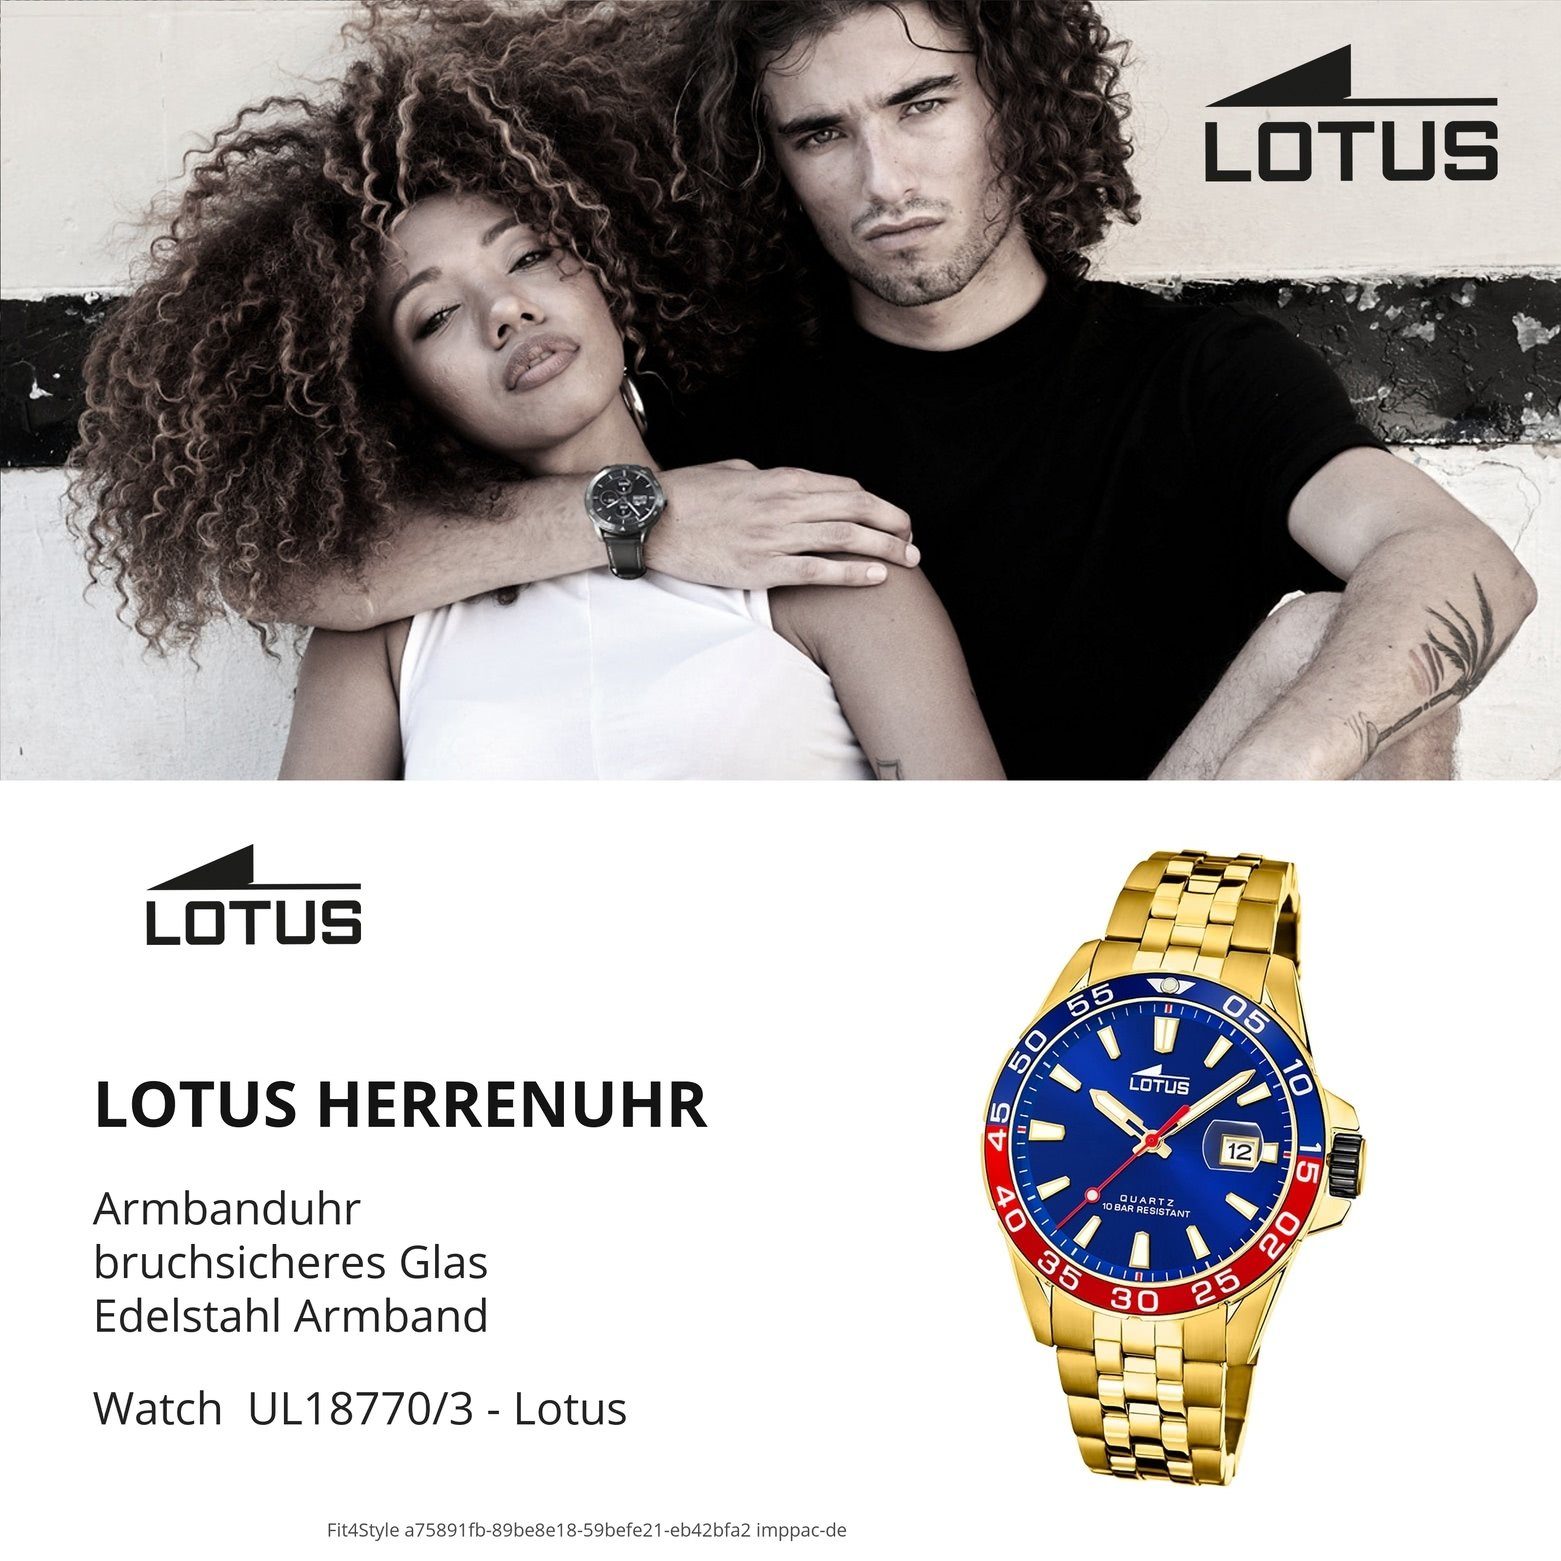 Armbanduhr rund, Edelstahlarmband 18770/3, Sport Herrenuhr Quarzuhr Lotus (ca. Herren groß Lotus 44mm) gold